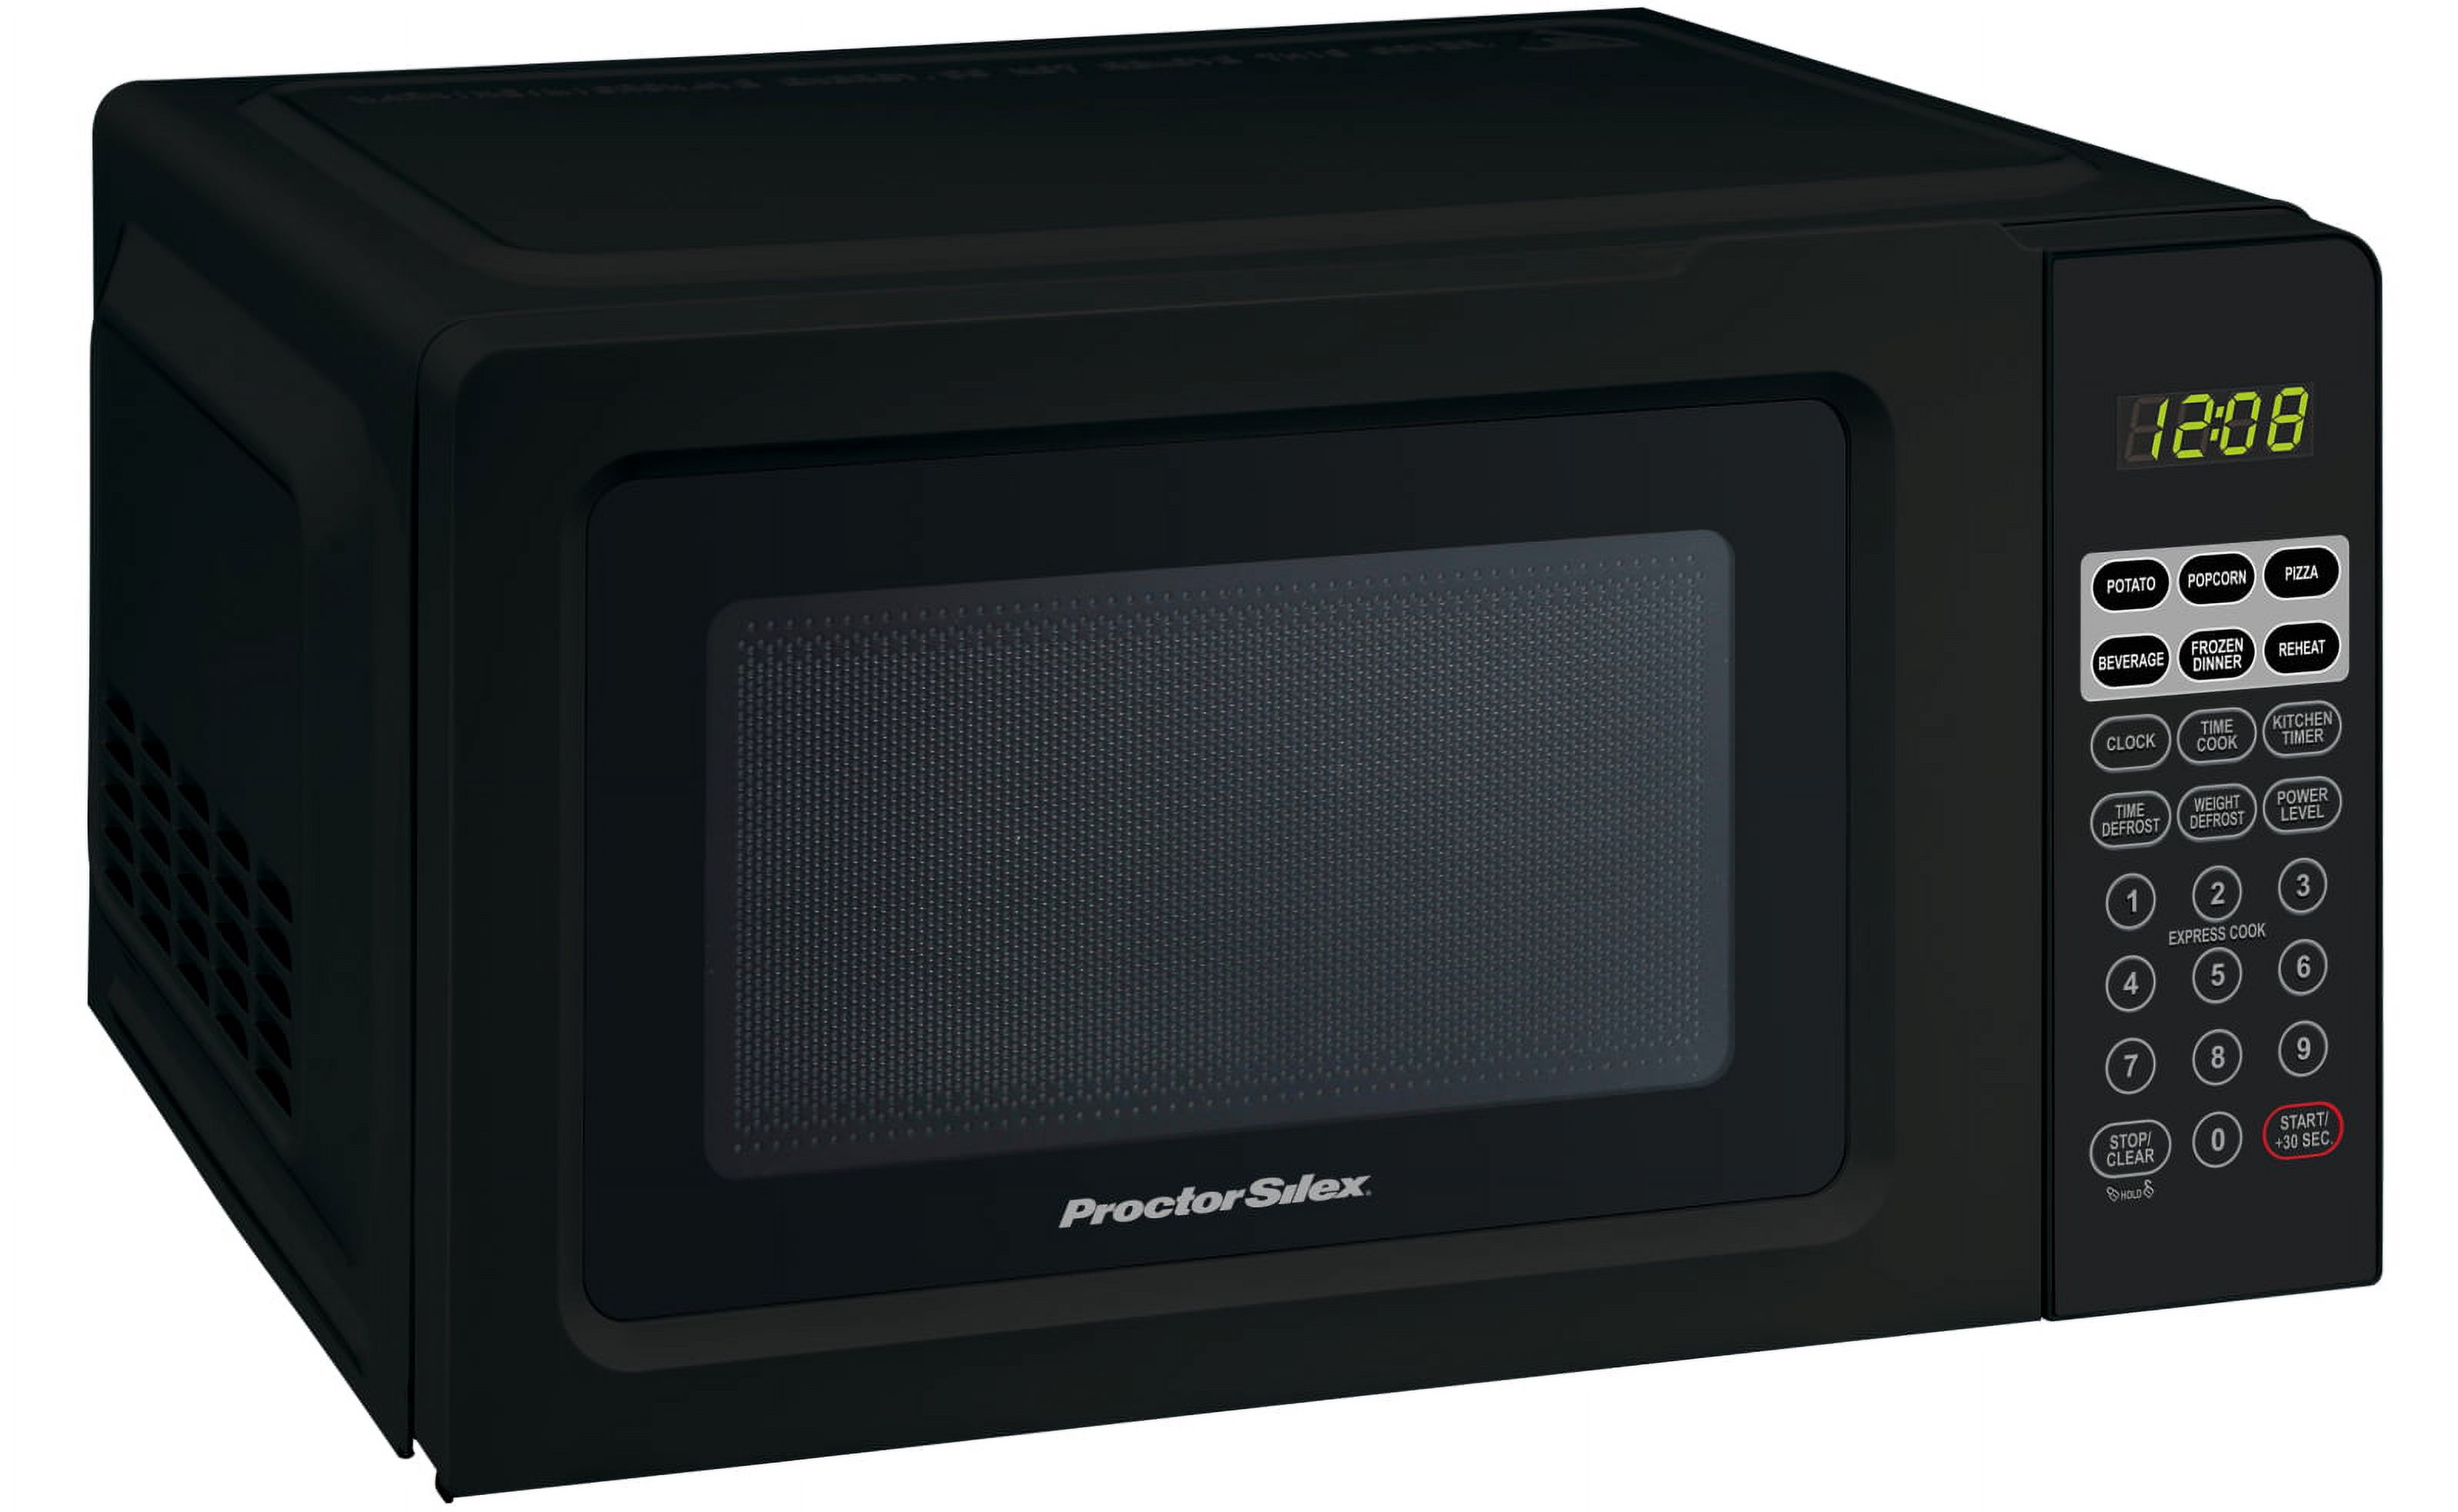 Proctor Silex 0.7 Cu ft Black Digital Microwave Oven - image 2 of 5